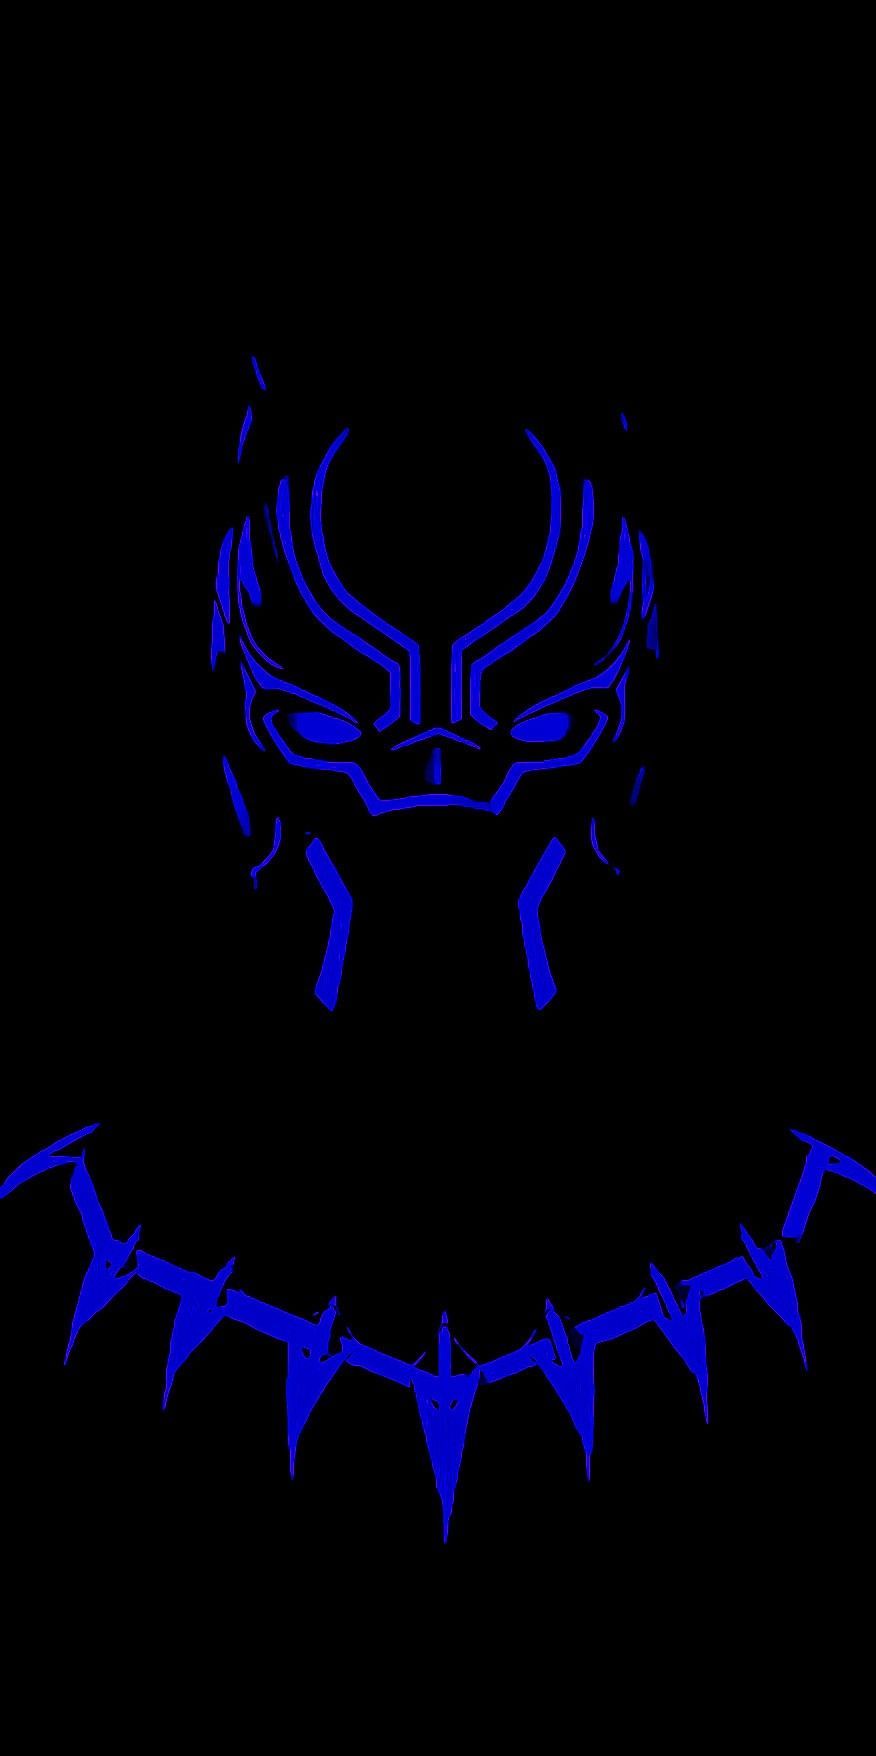  Black Panther Hintergrundbild 876x1756. Black Panther (Blue Crystal)